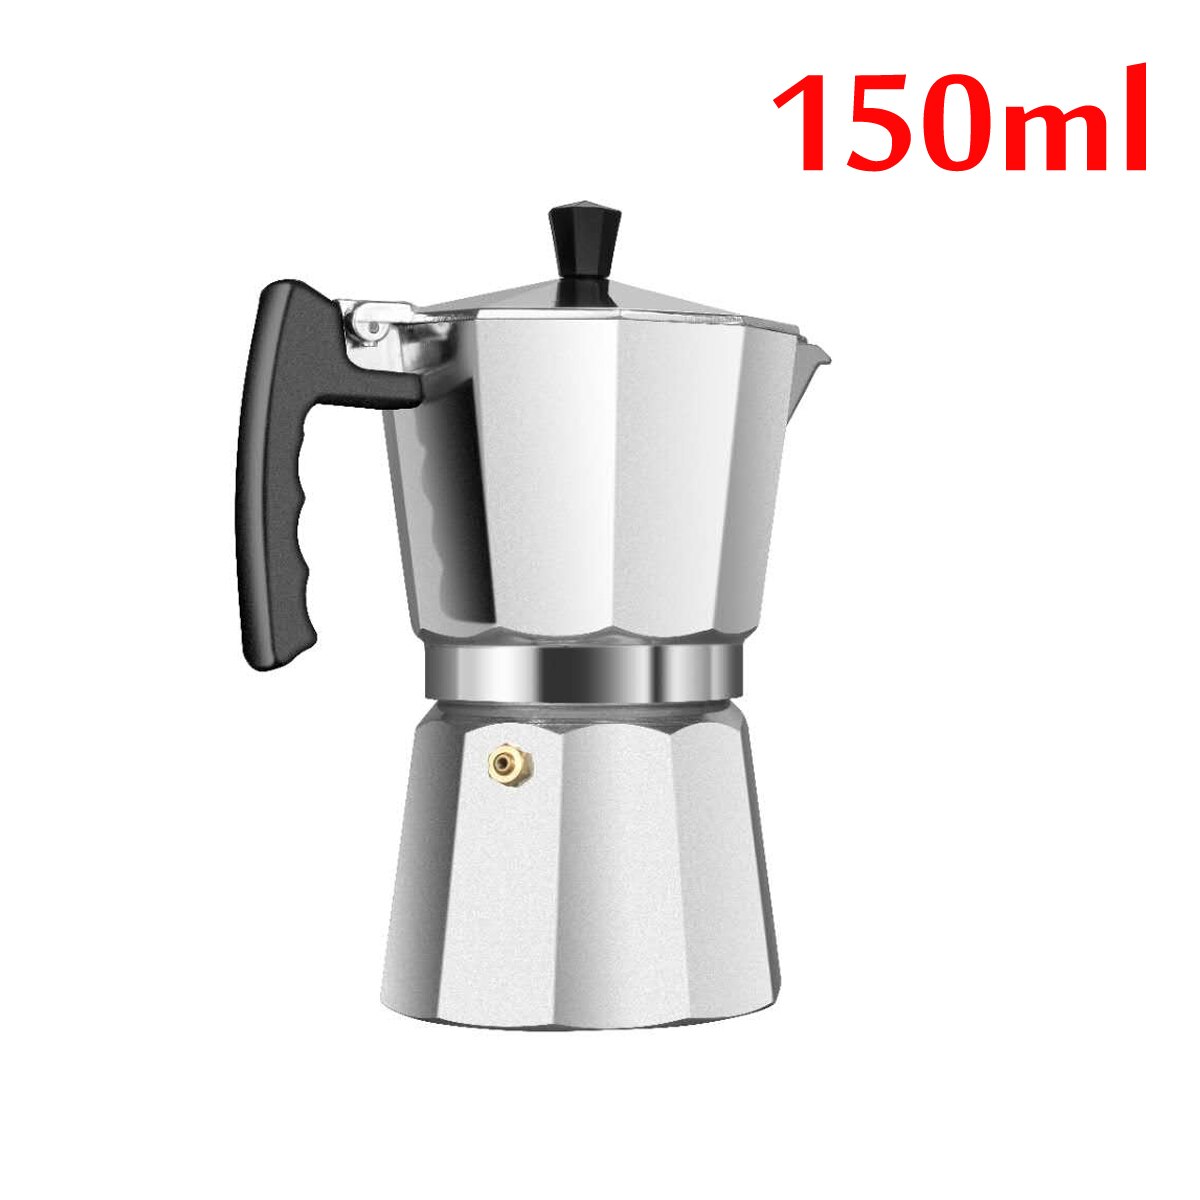 150ml 300ml kaffemaskine aluminium mokka espresso percolator pot kaffemaskine moka pot stovetop kaffemaskine: Sølv 150ml